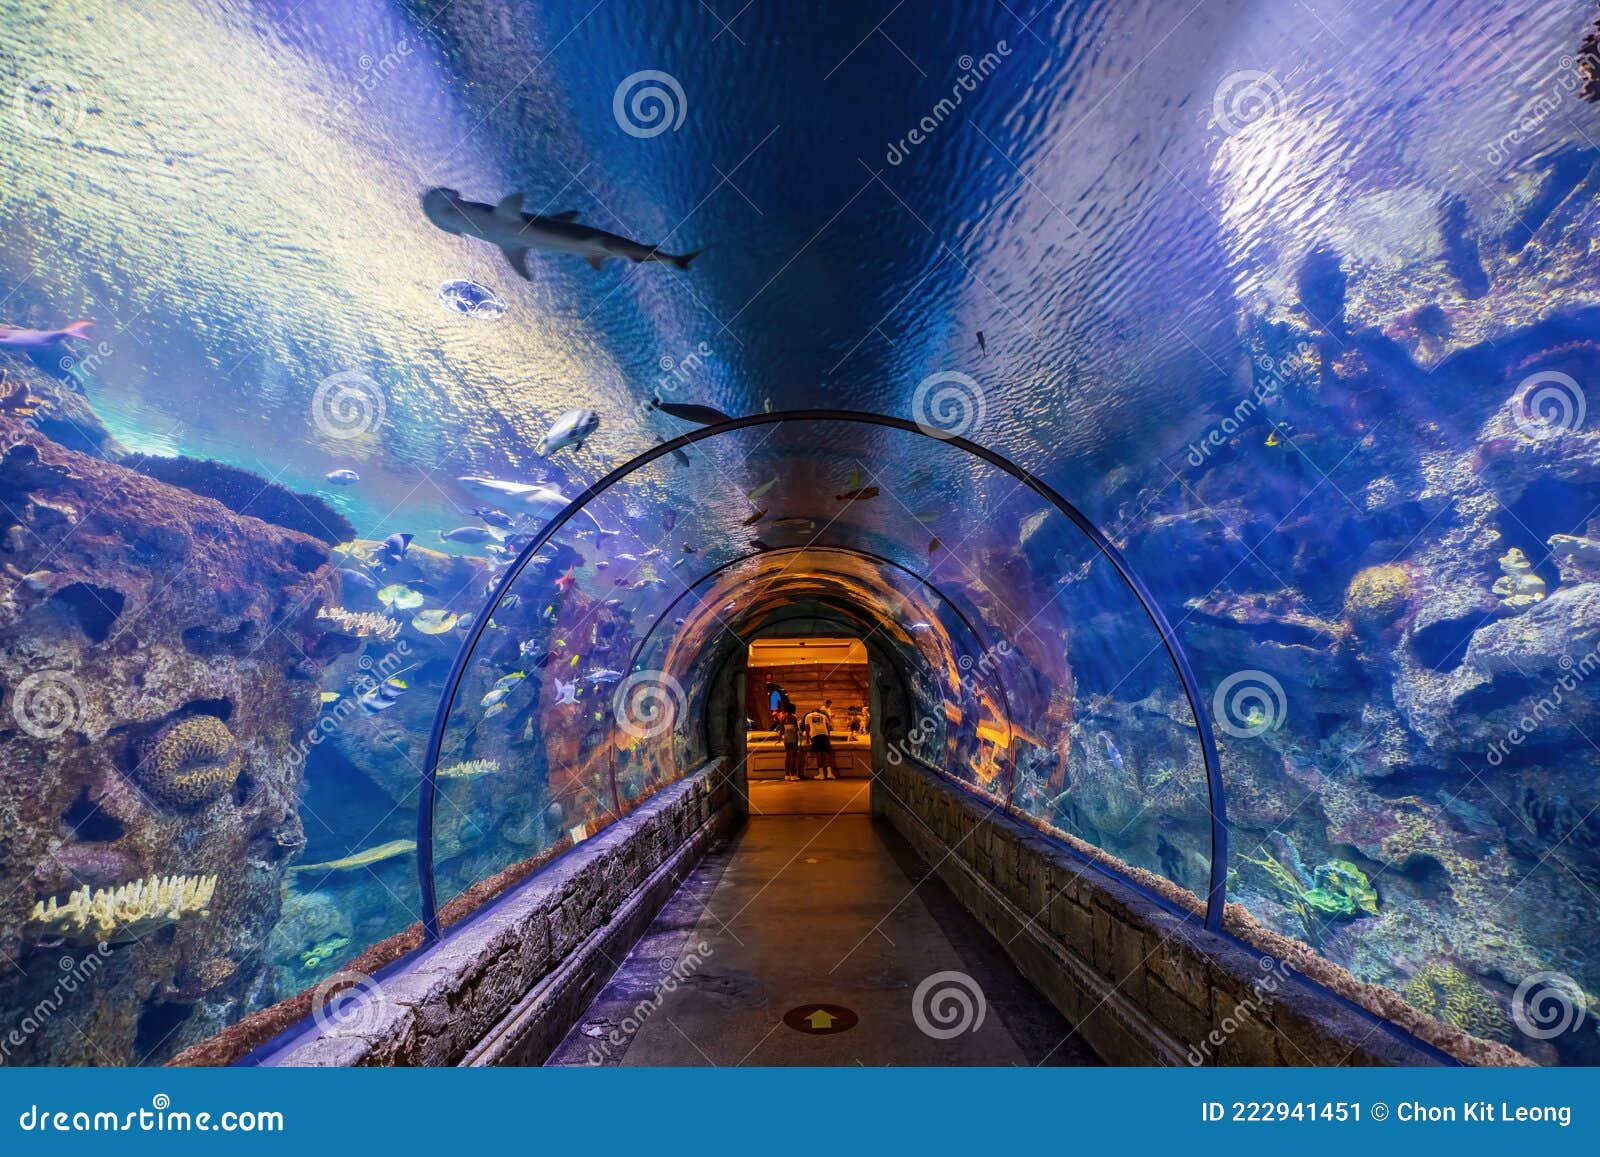 PHOTO DESCRIPTION: A shark tunnel at the Mandalay Bay Shark Reef